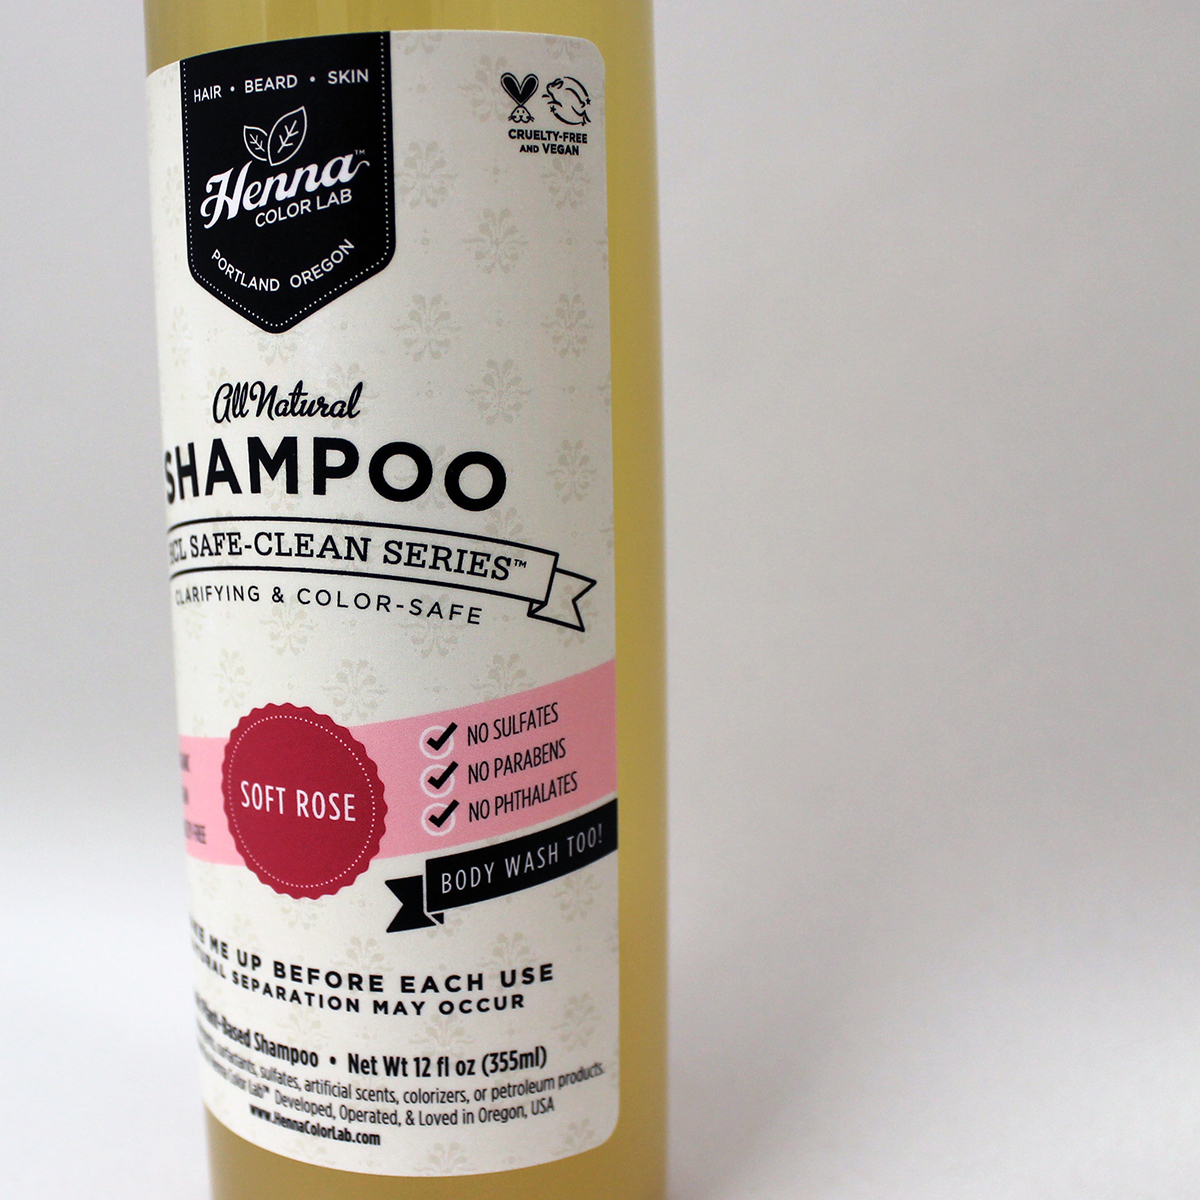 HCL Soft Rose Sulfate Free Shampoo